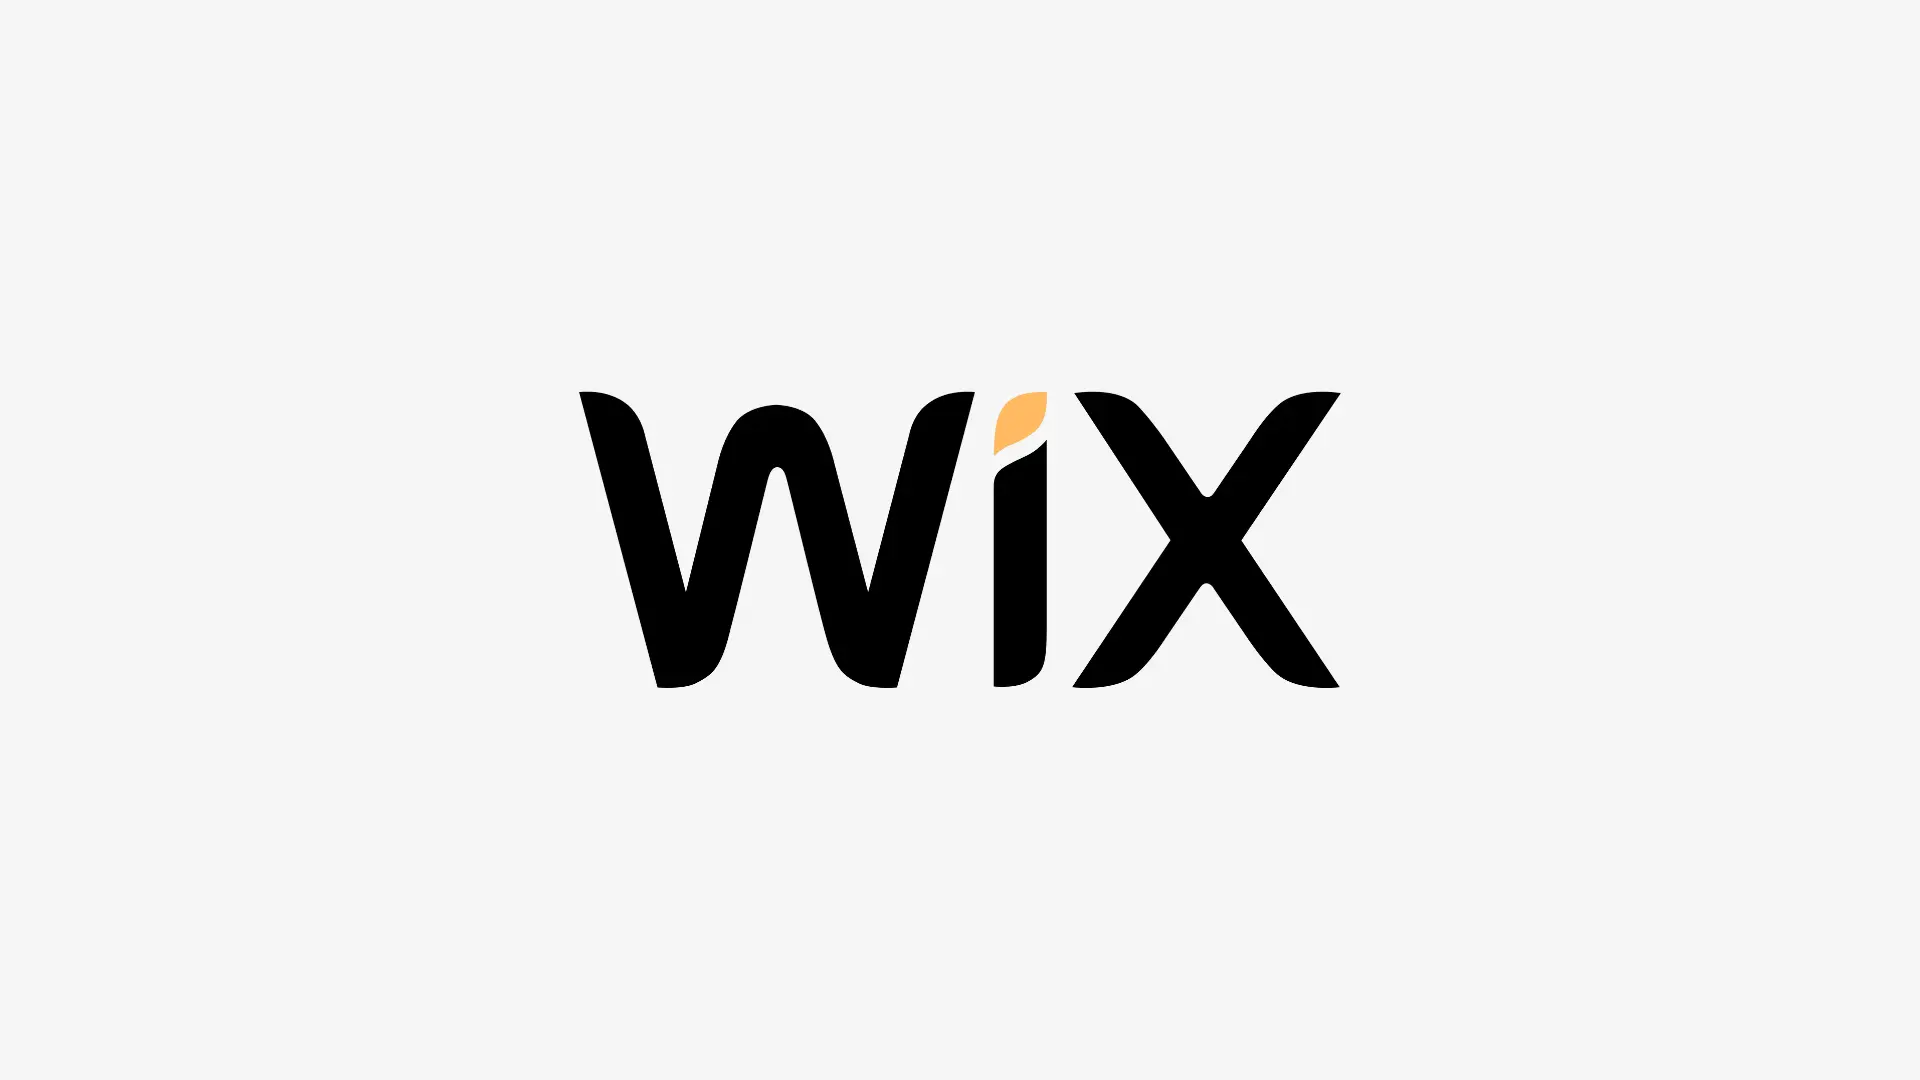 Wix brand